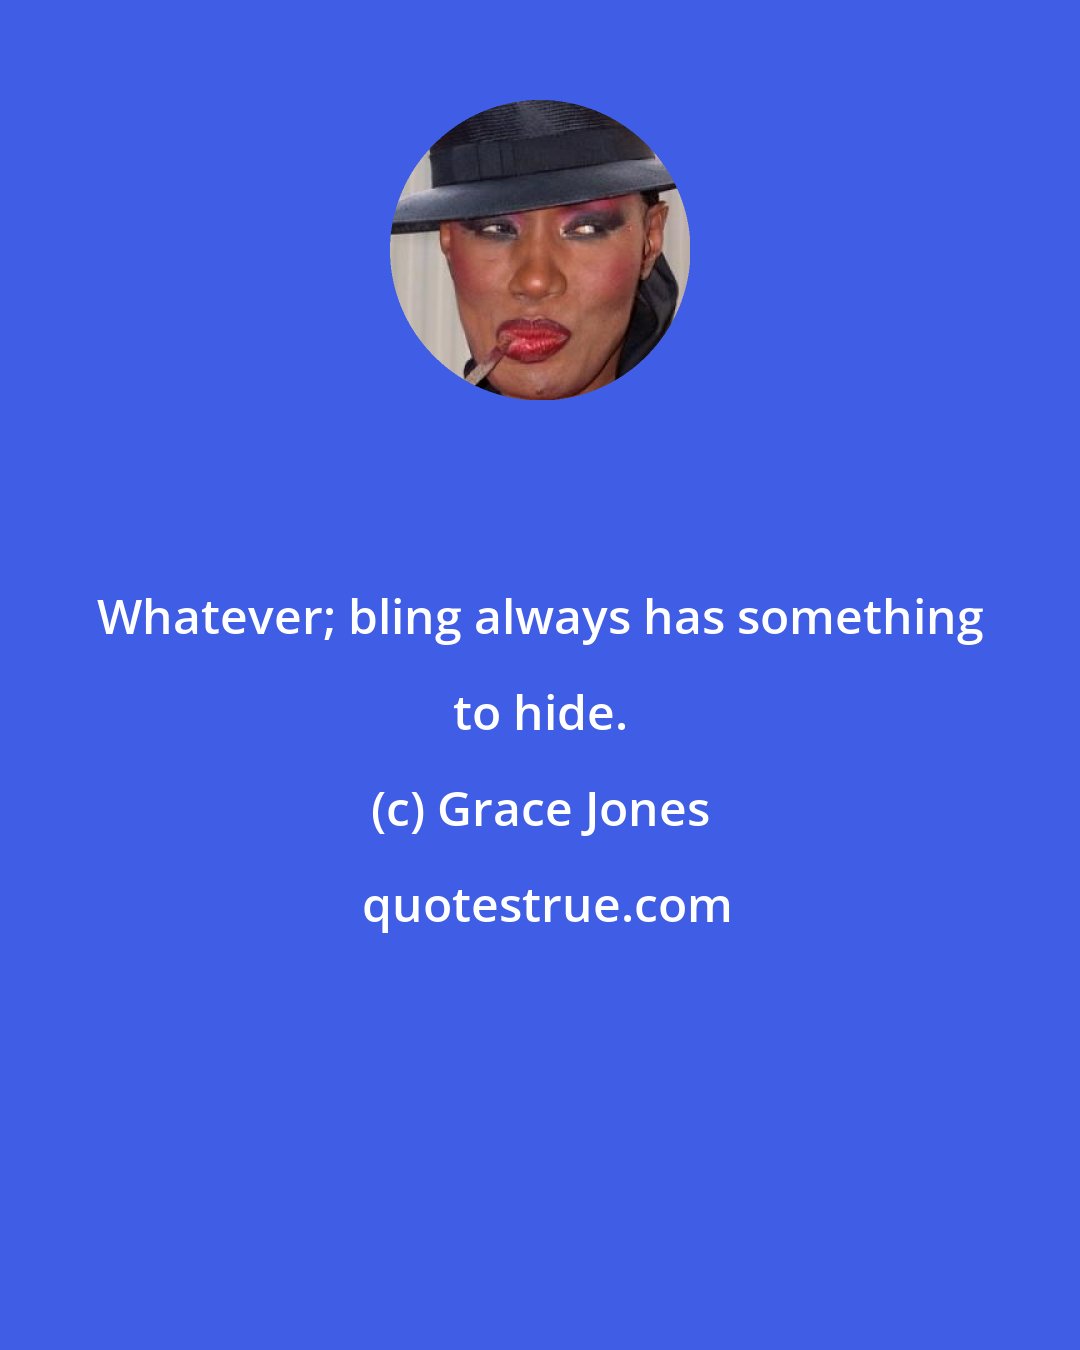 Grace Jones: Whatever; bling always has something to hide.